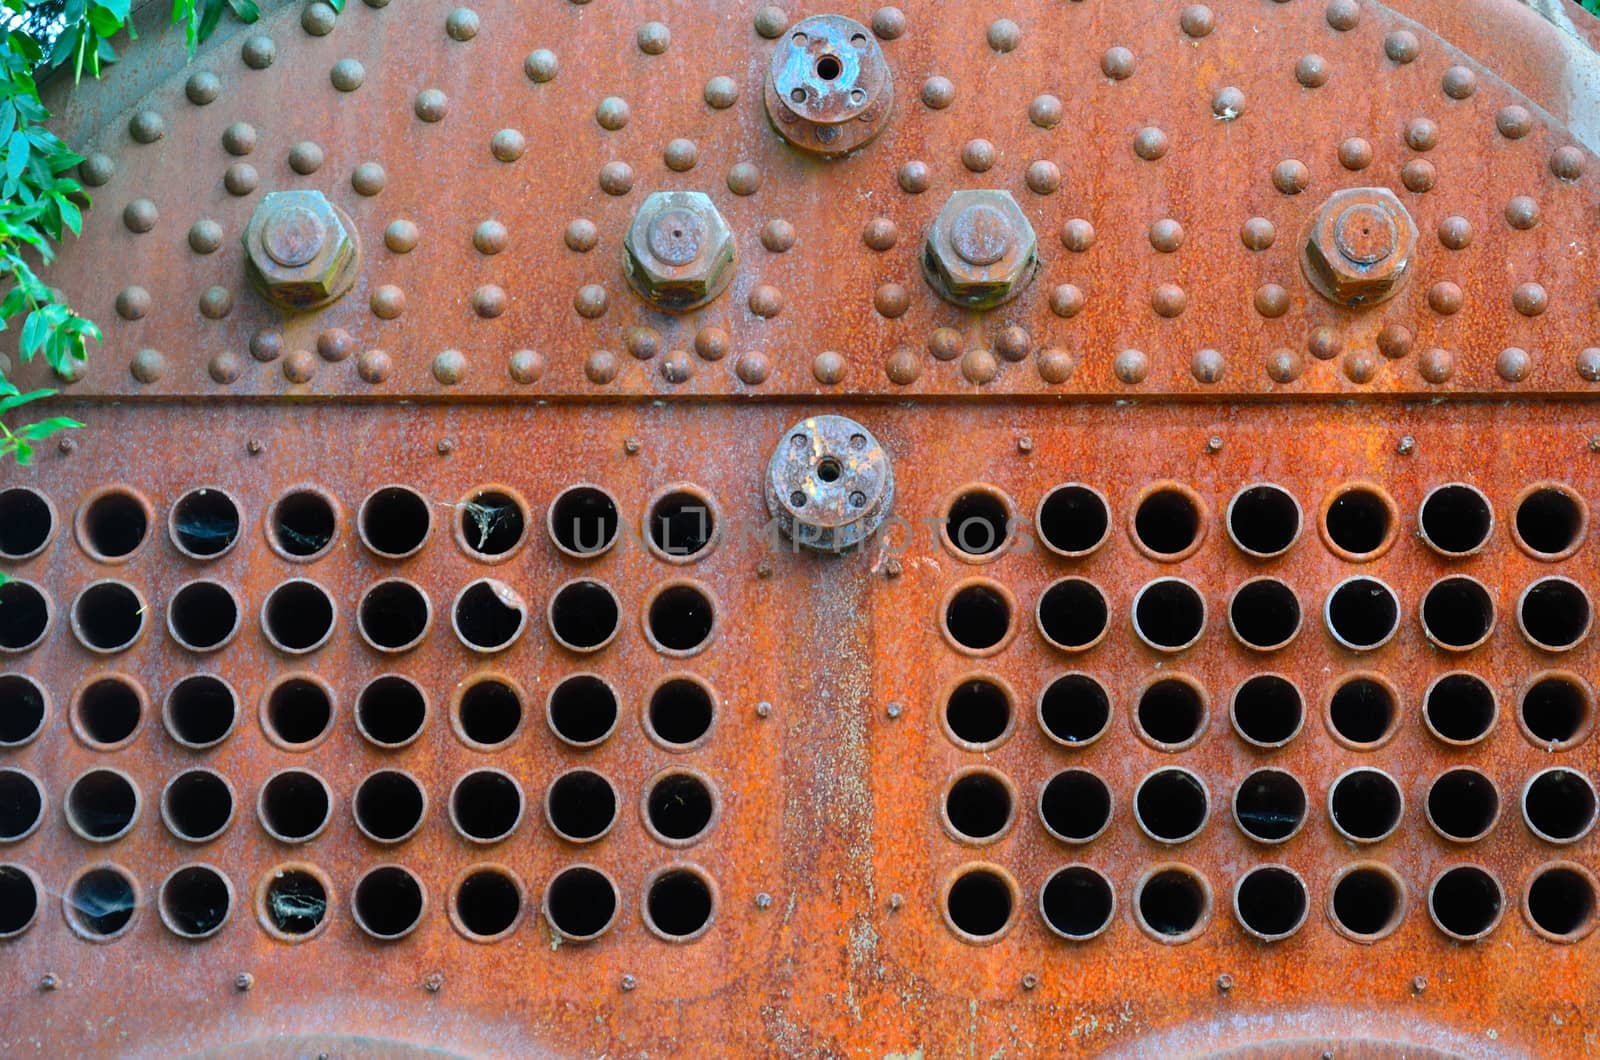 Steam boiler detail by pauws99